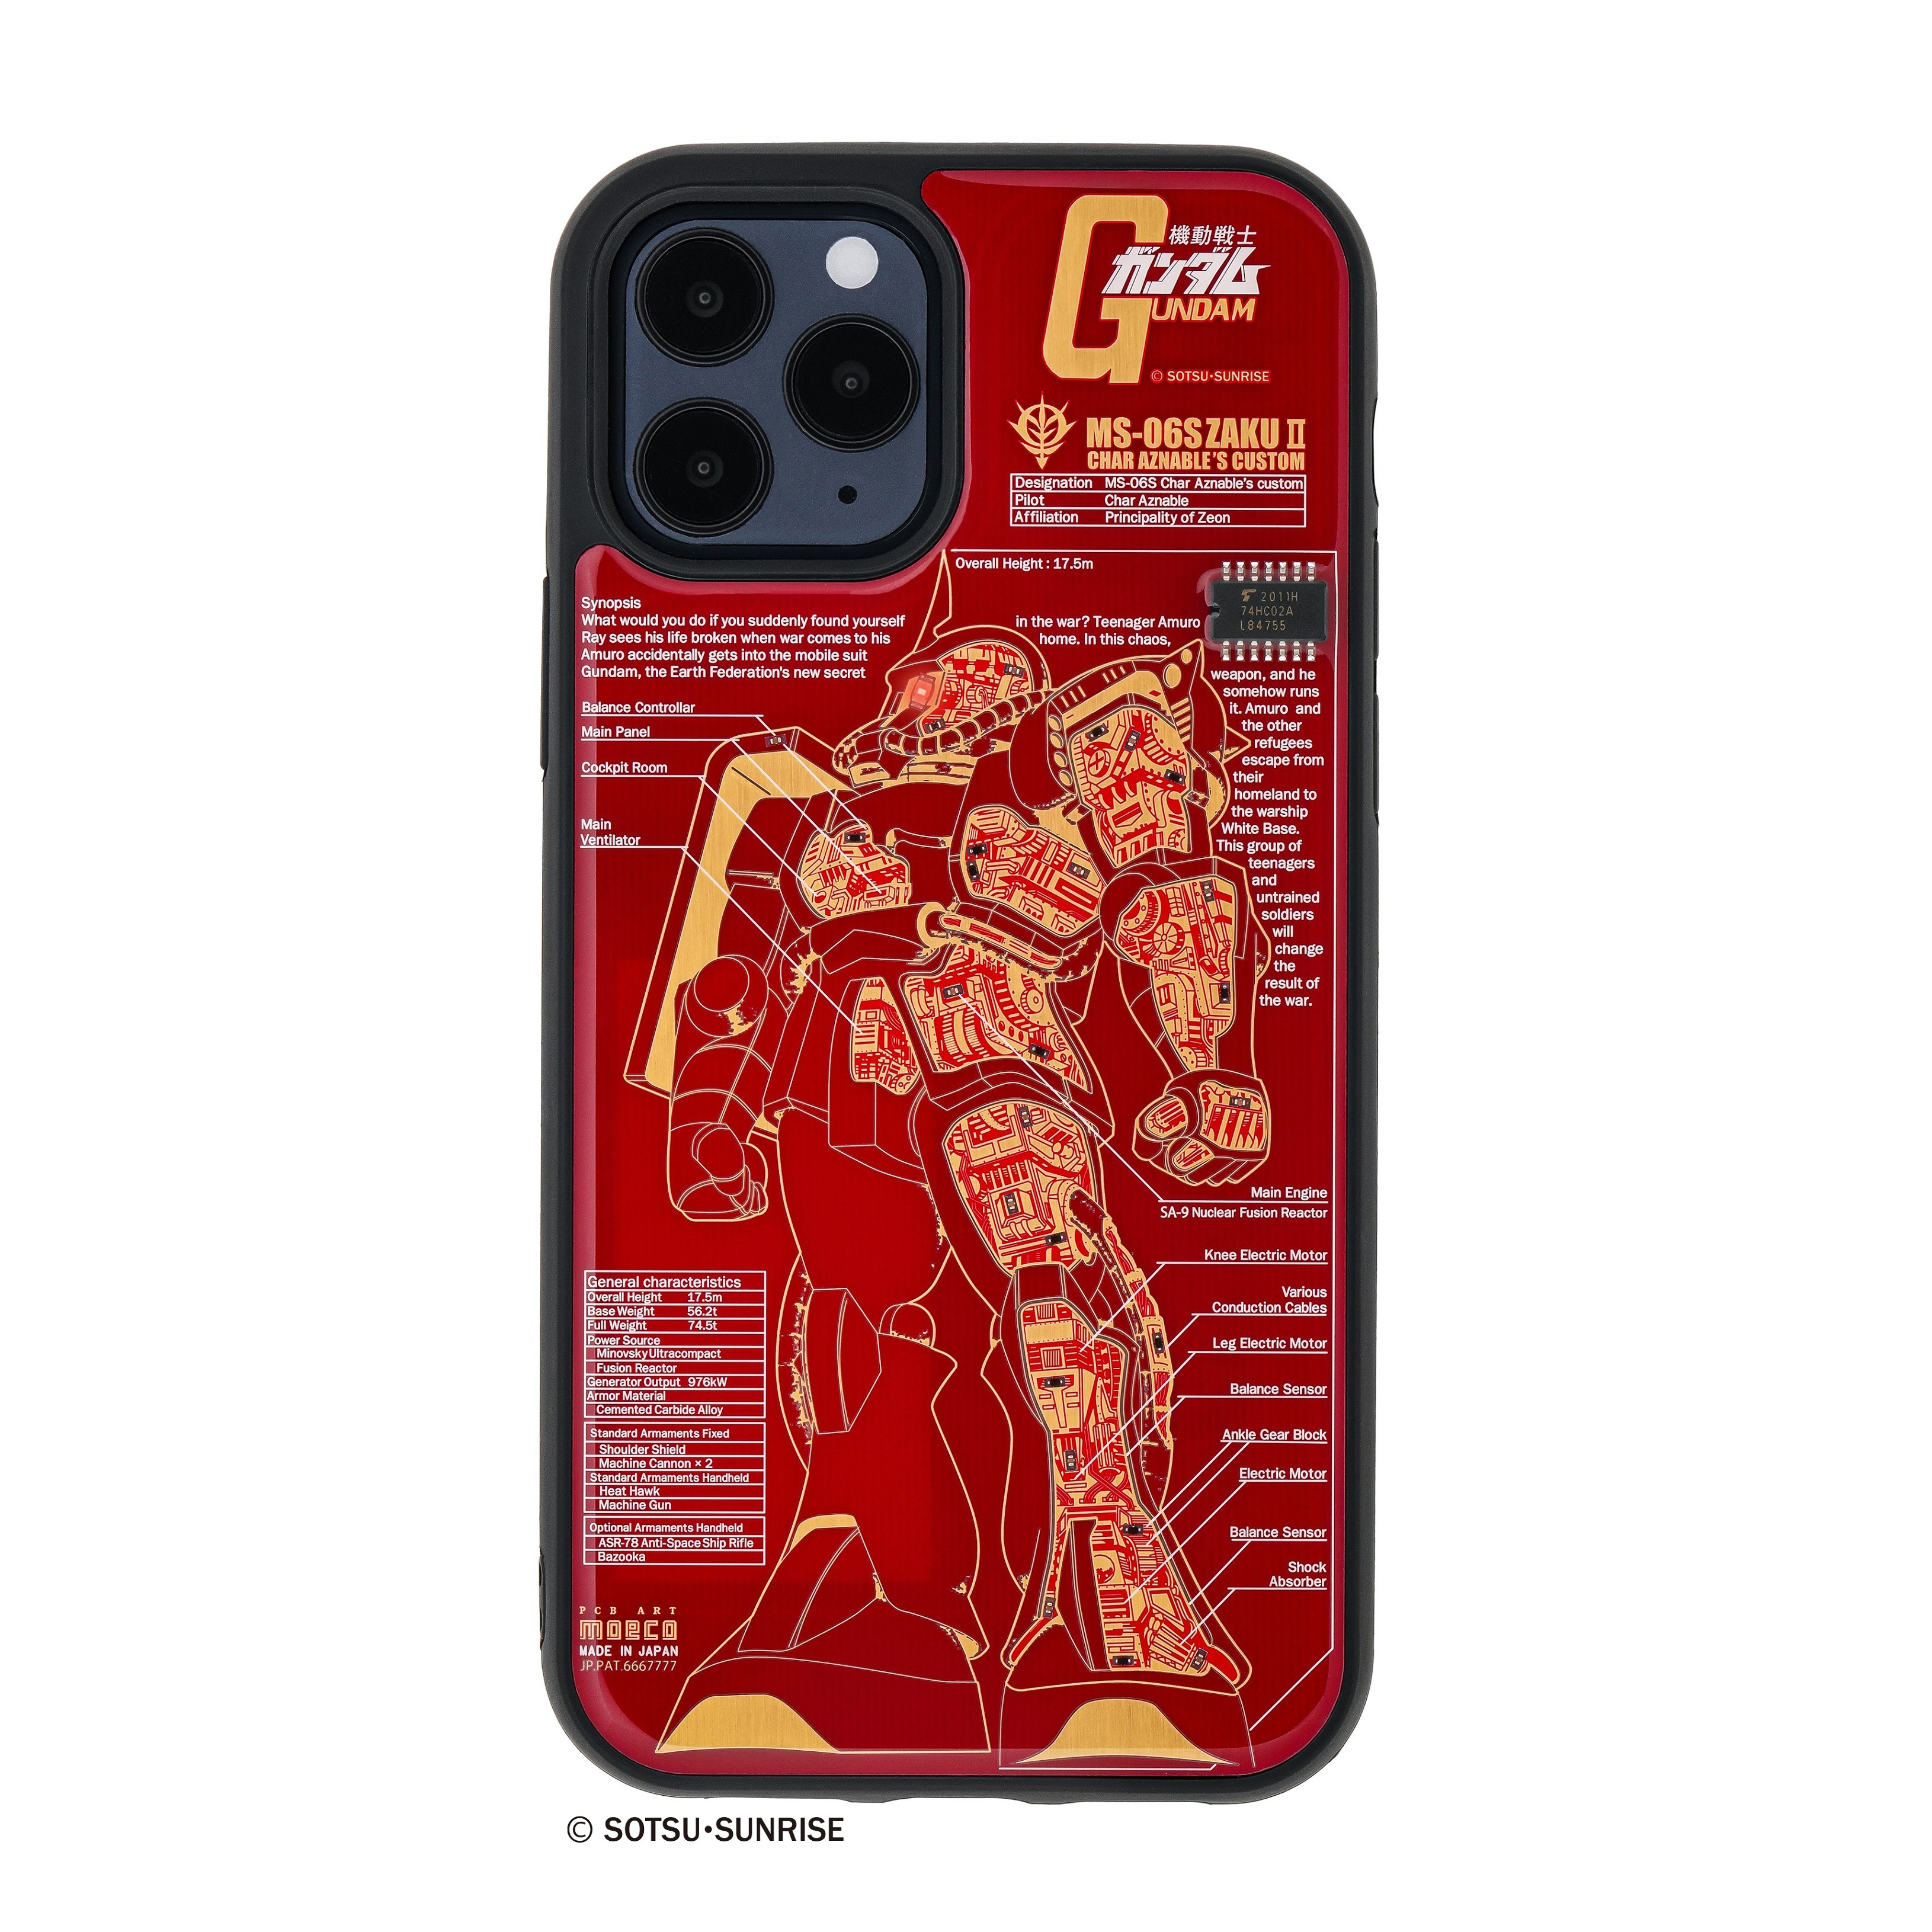 Flash シャア専用ザク 基板アート Iphone 12 12 Proケース 東京回路線図a5クリアファイルをプレゼント Pcb Art Moeco